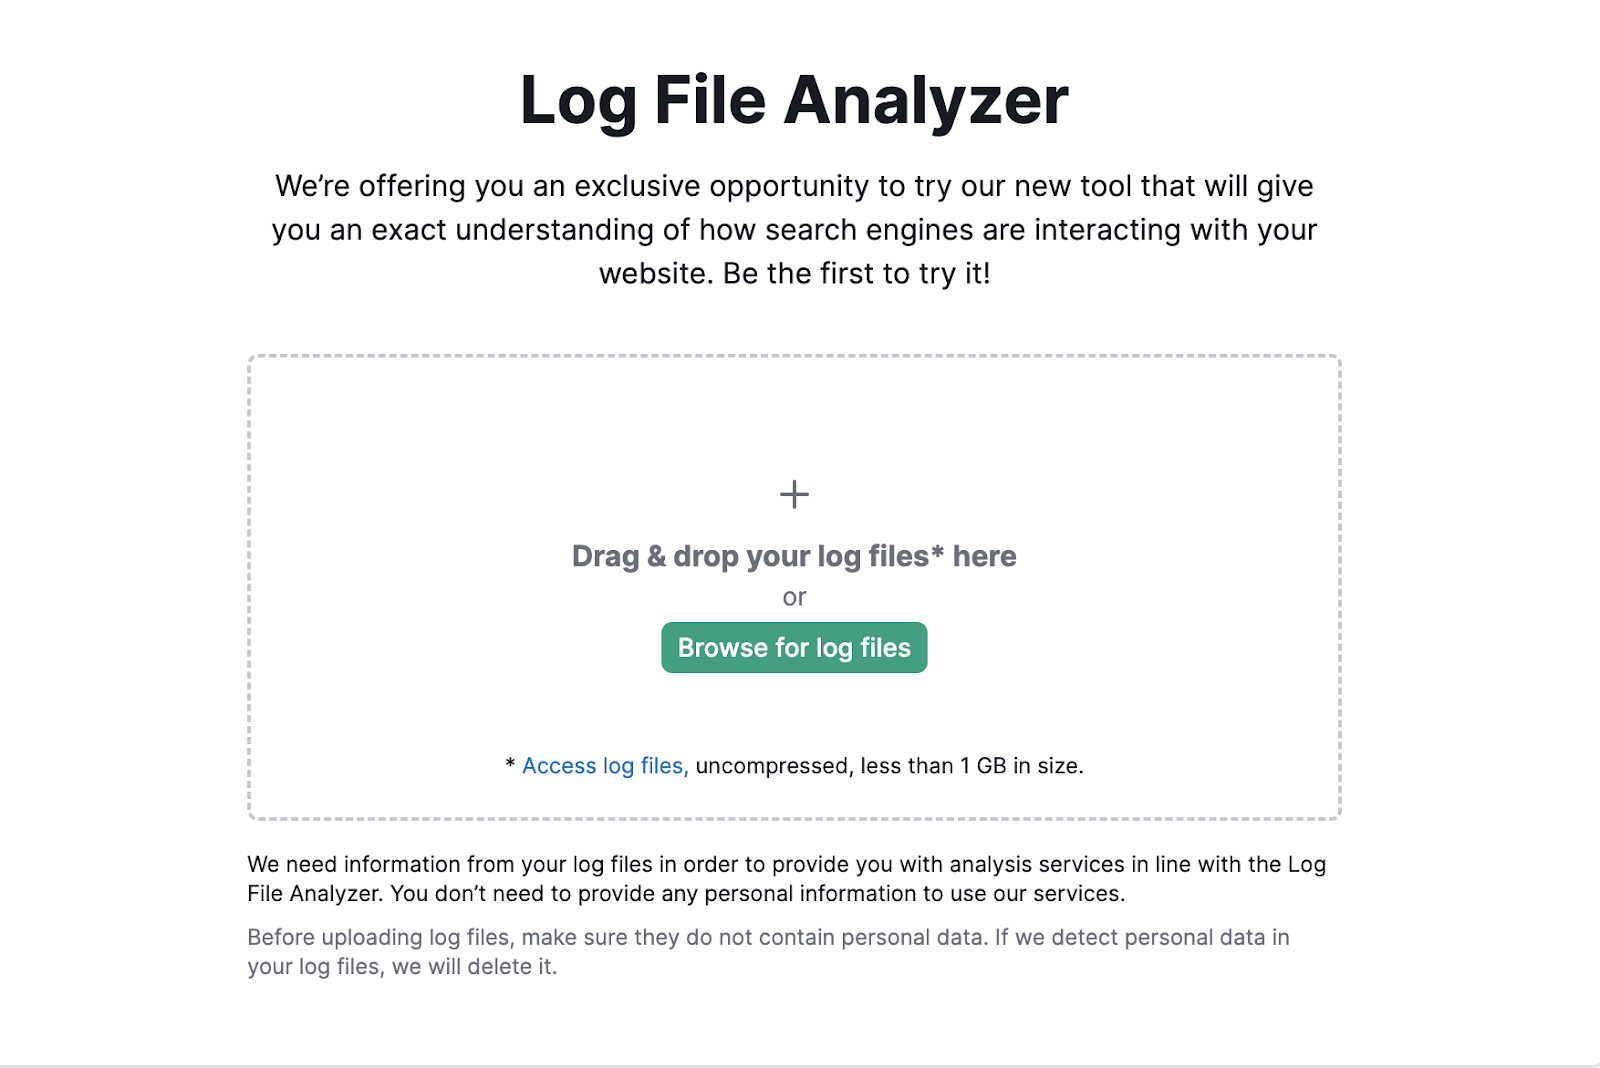 Log File Analyzer tool